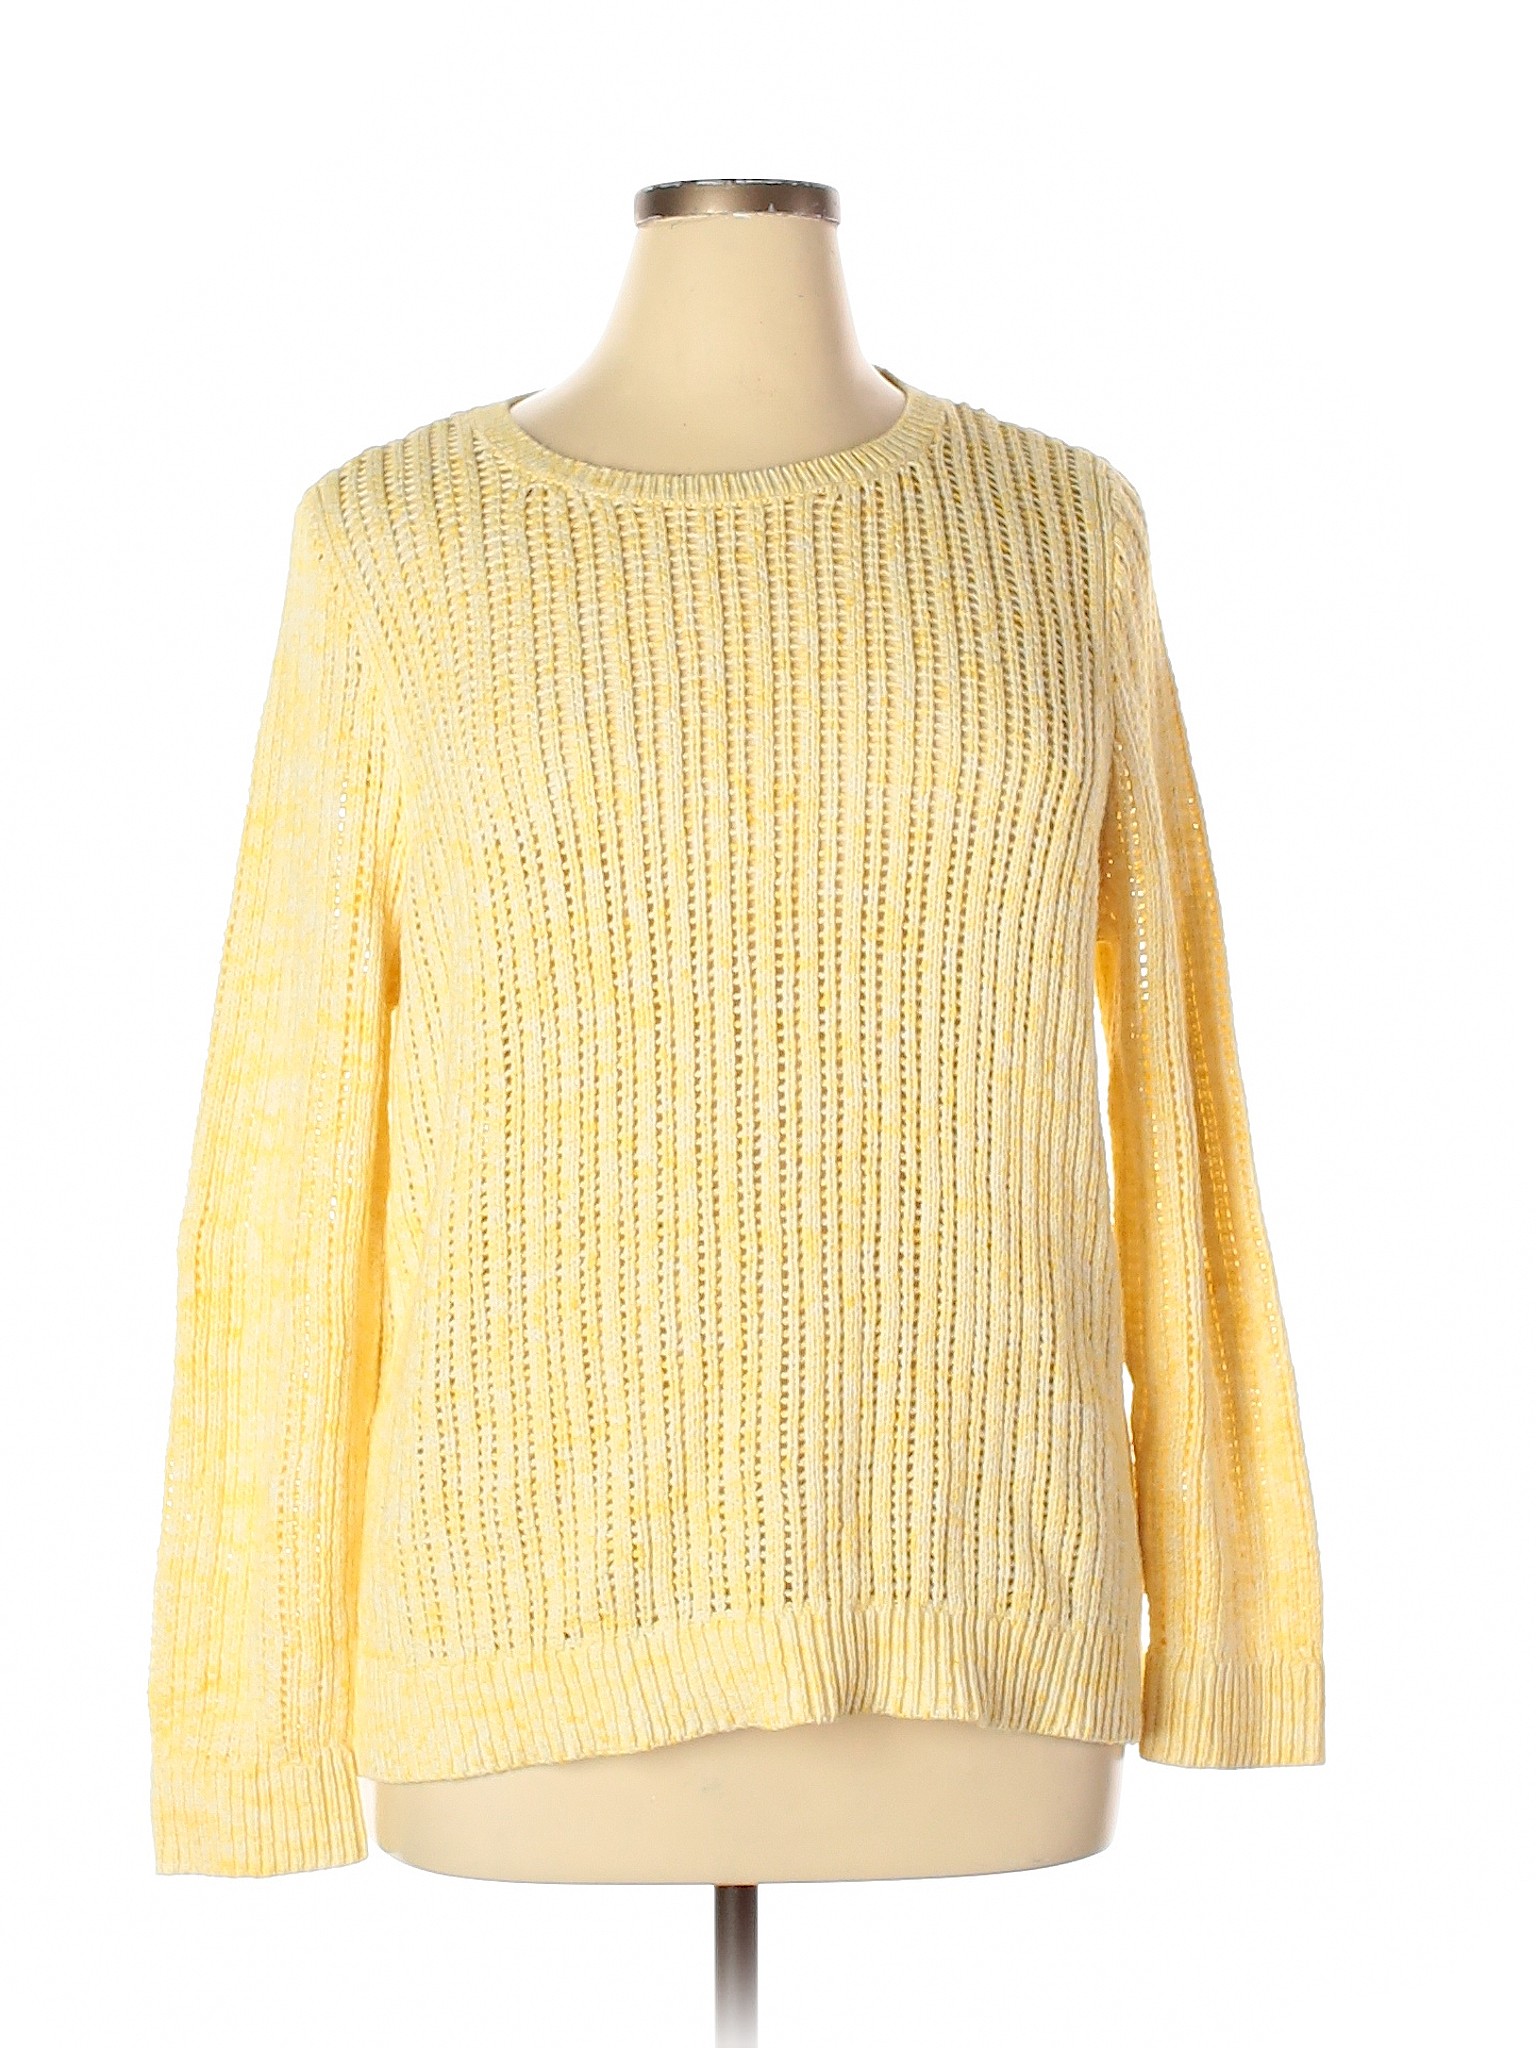 Talbots Women Yellow Pullover Sweater XL | eBay